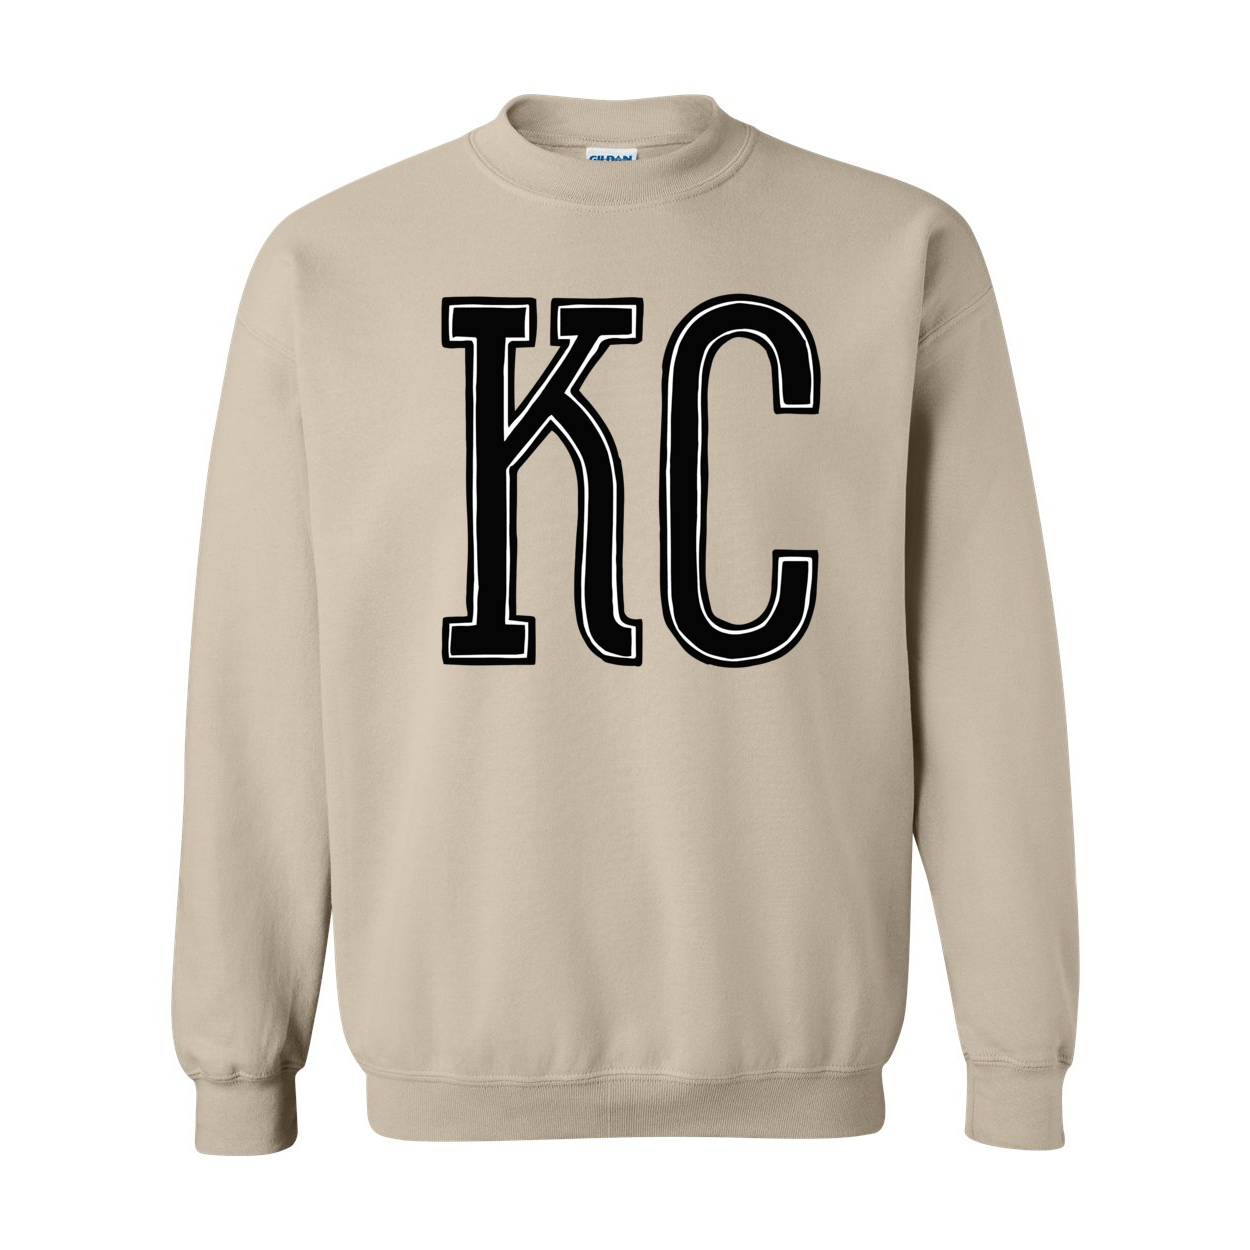 KC Everyday -  Blend Crewneck Sweatshirt